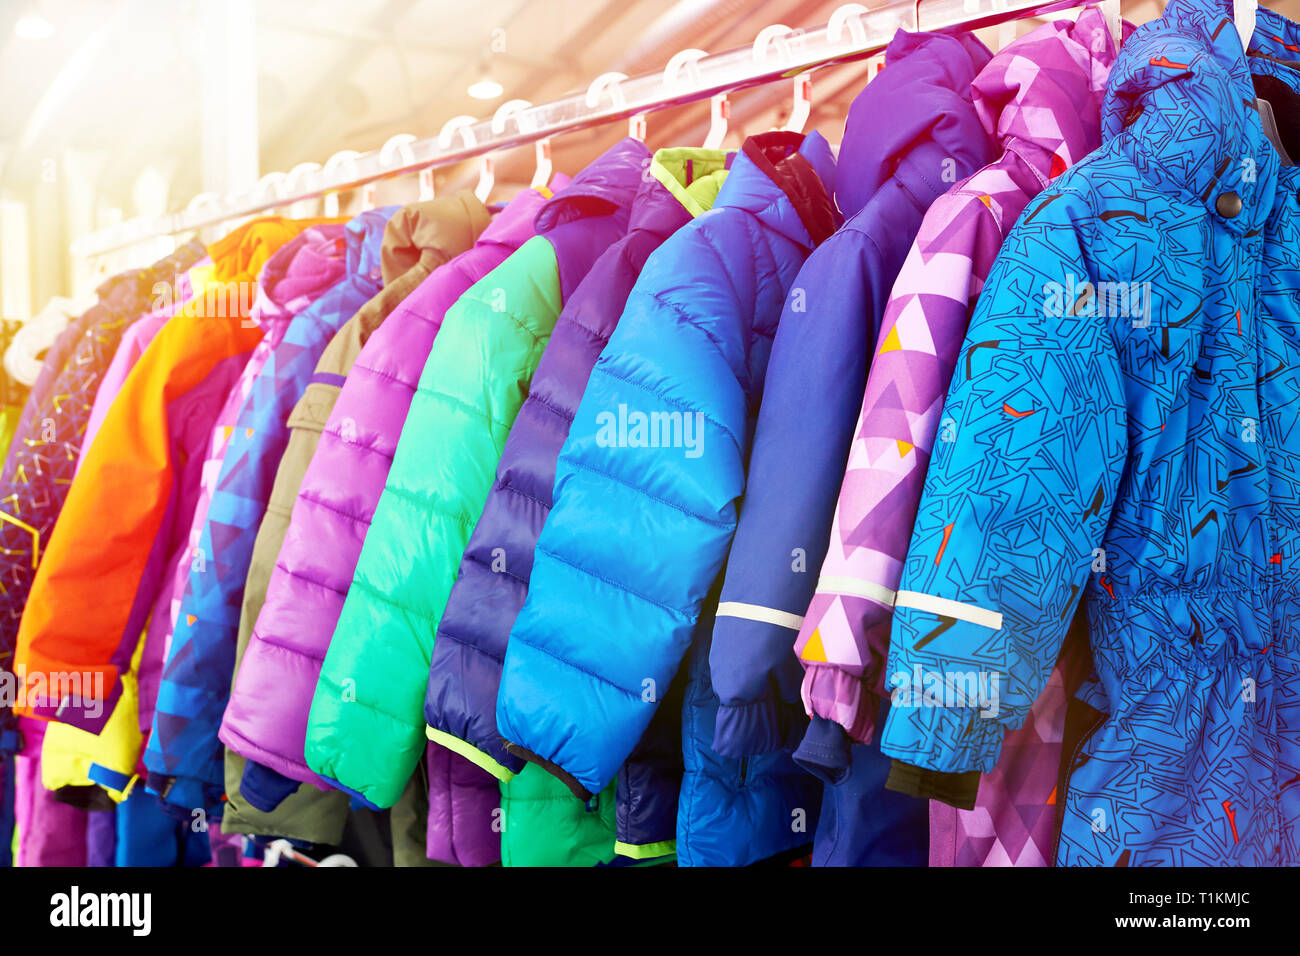 https://c8.alamy.com/comp/T1KMJC/winter-children-sports-jacket-on-a-hanger-in-the-store-T1KMJC.jpg